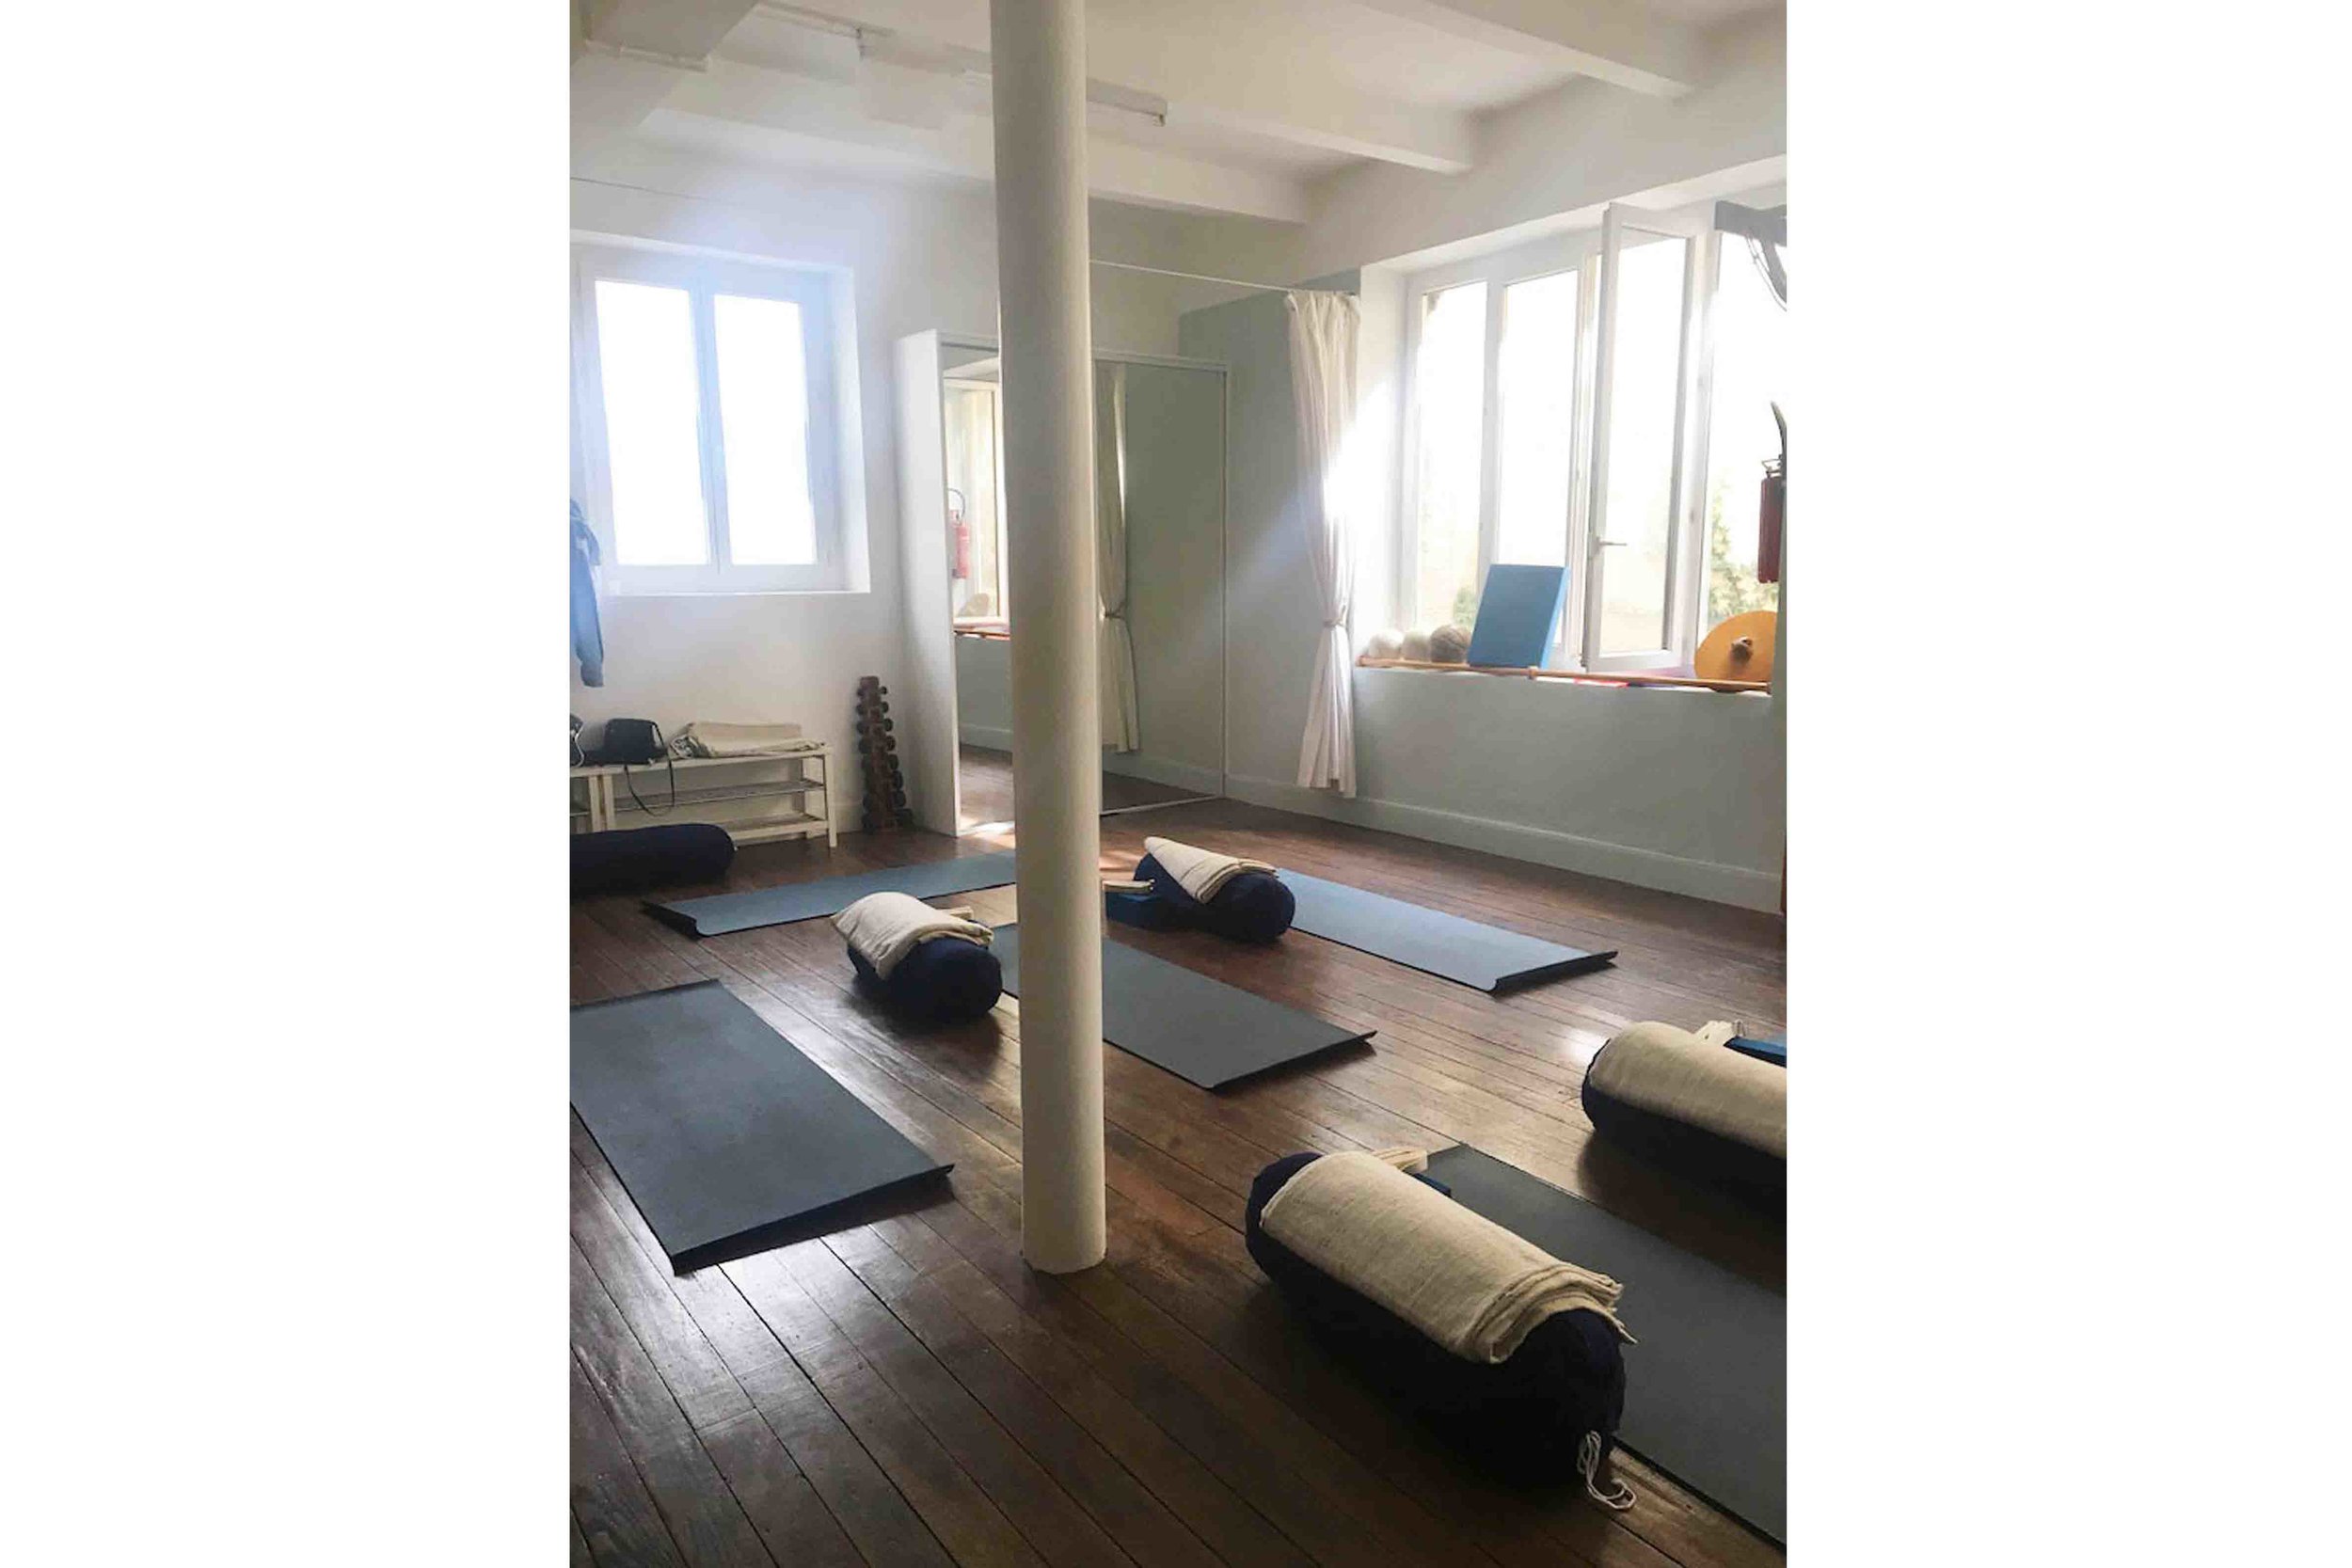 osteopathe-biarritz-salle-yoga.jpg